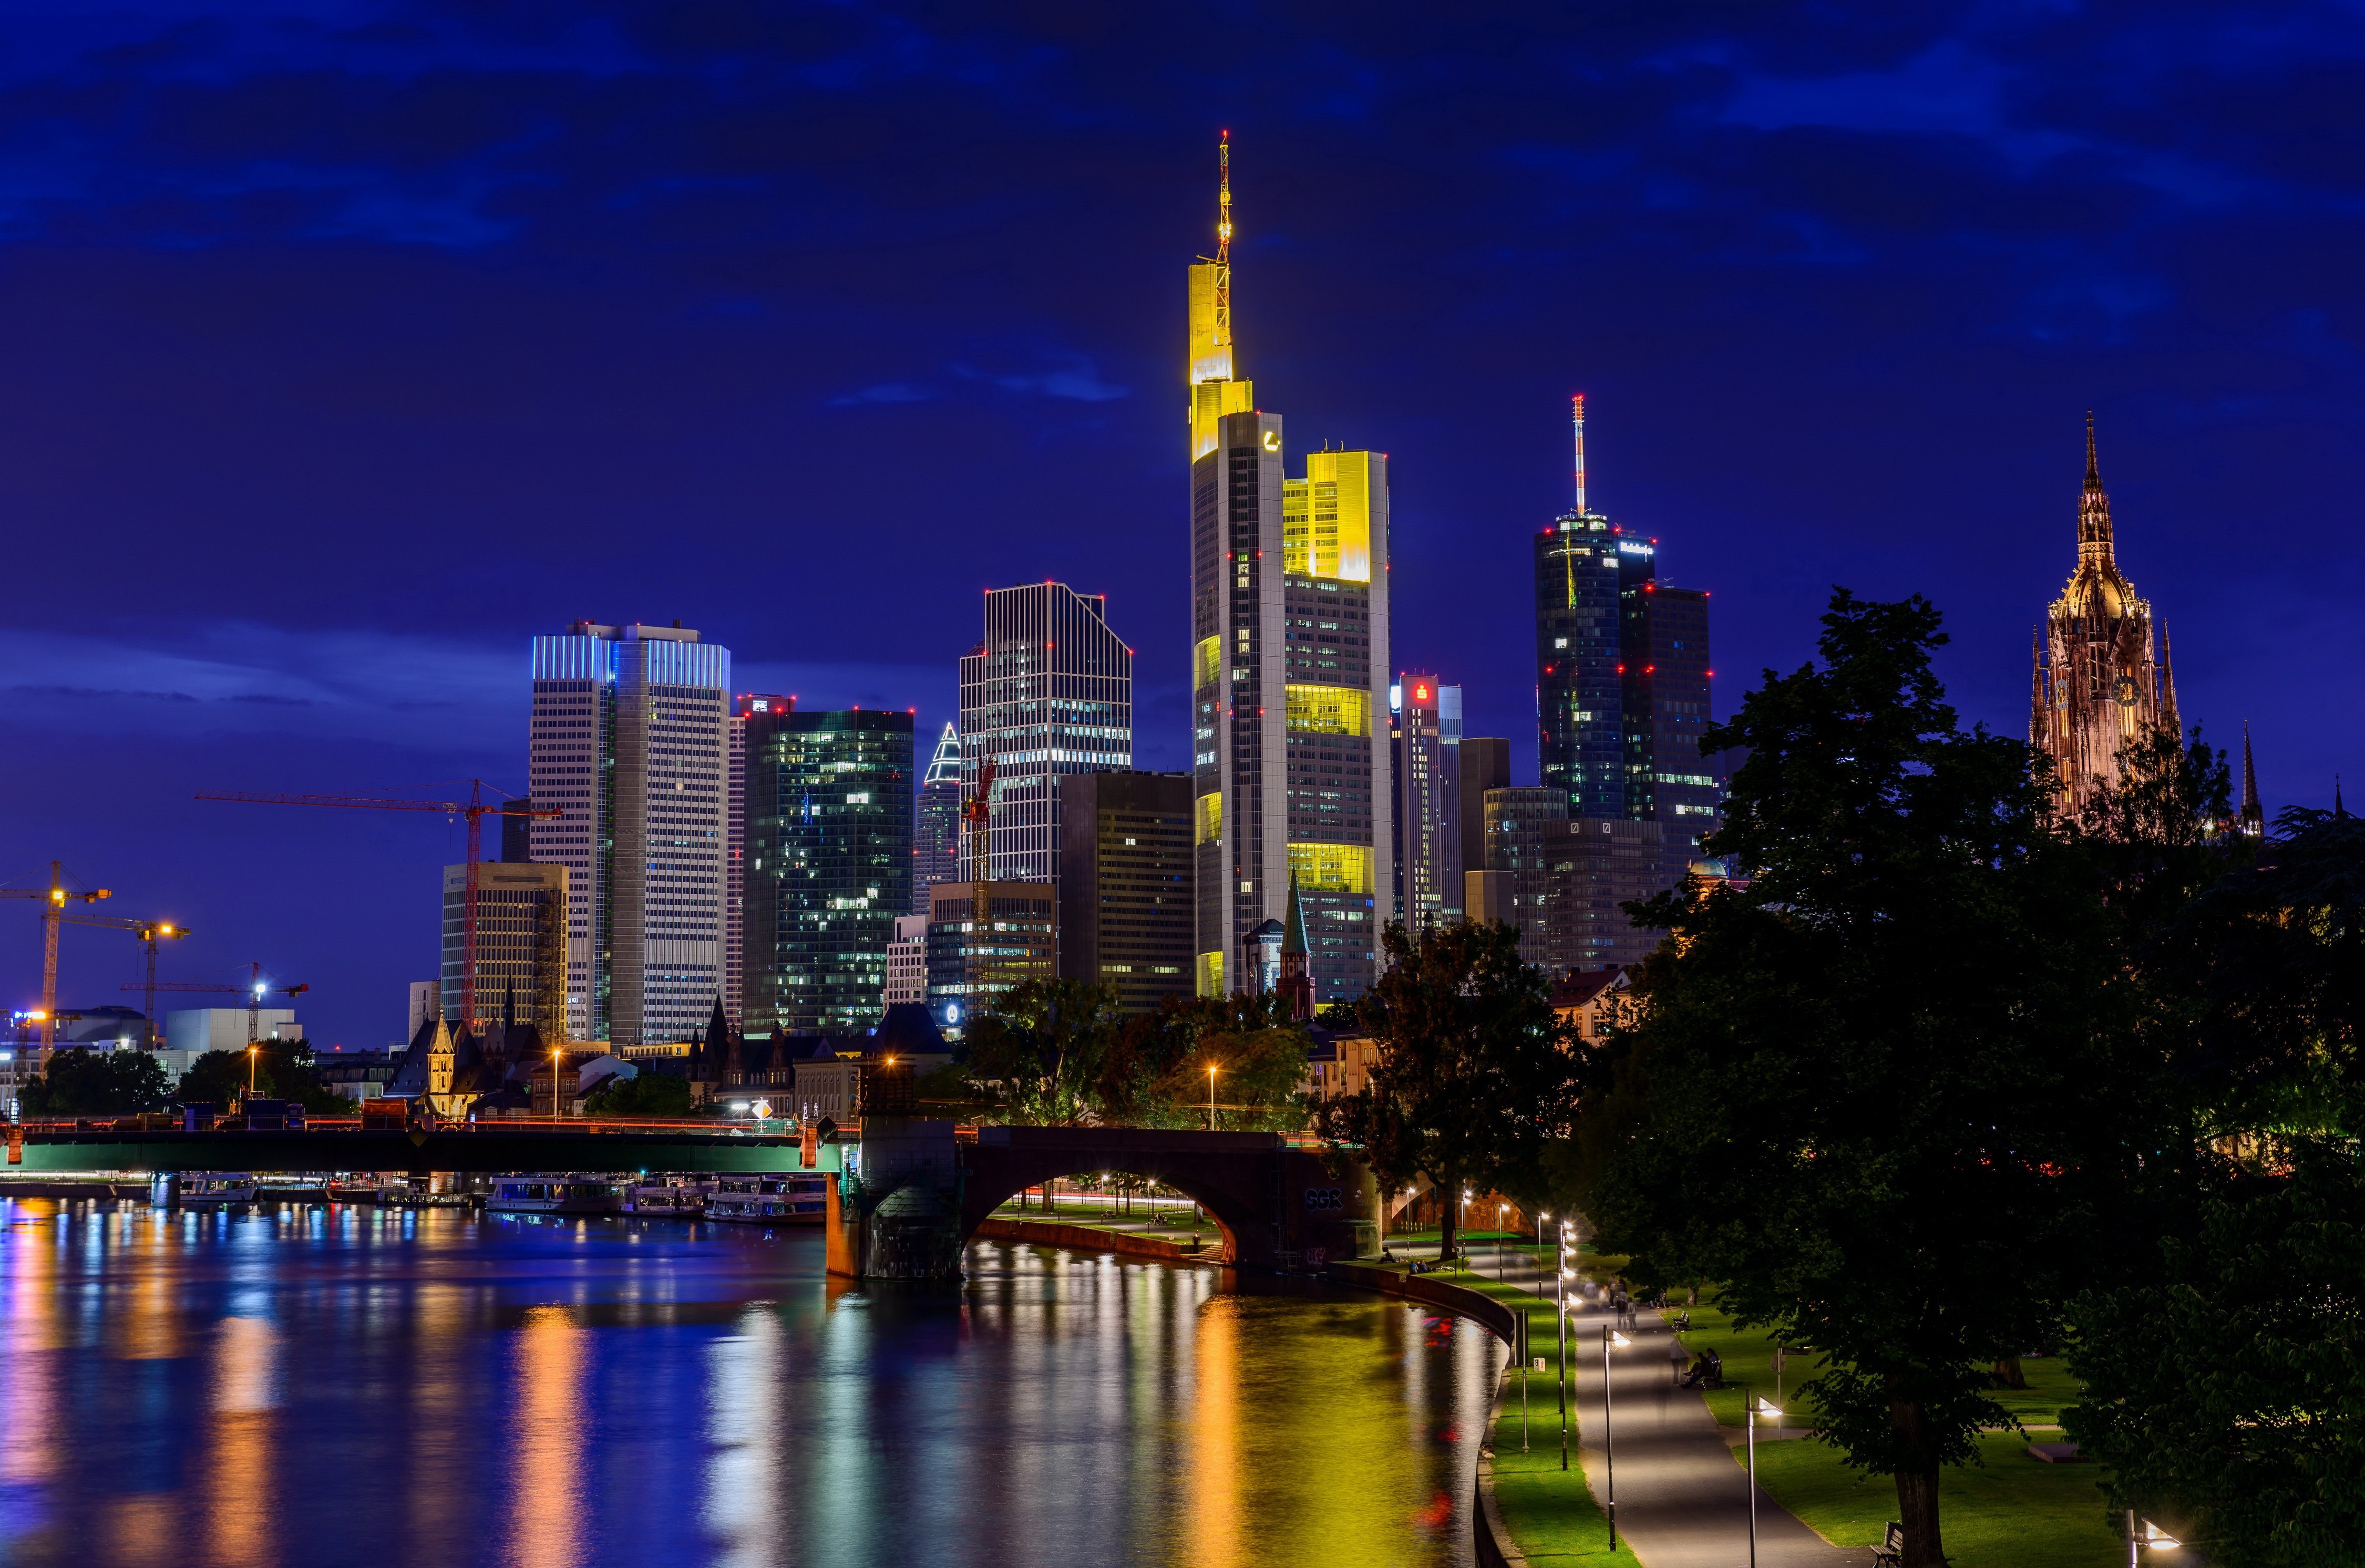 Frankfurt Am Main 4k Ultra HD Wallpaper And Background